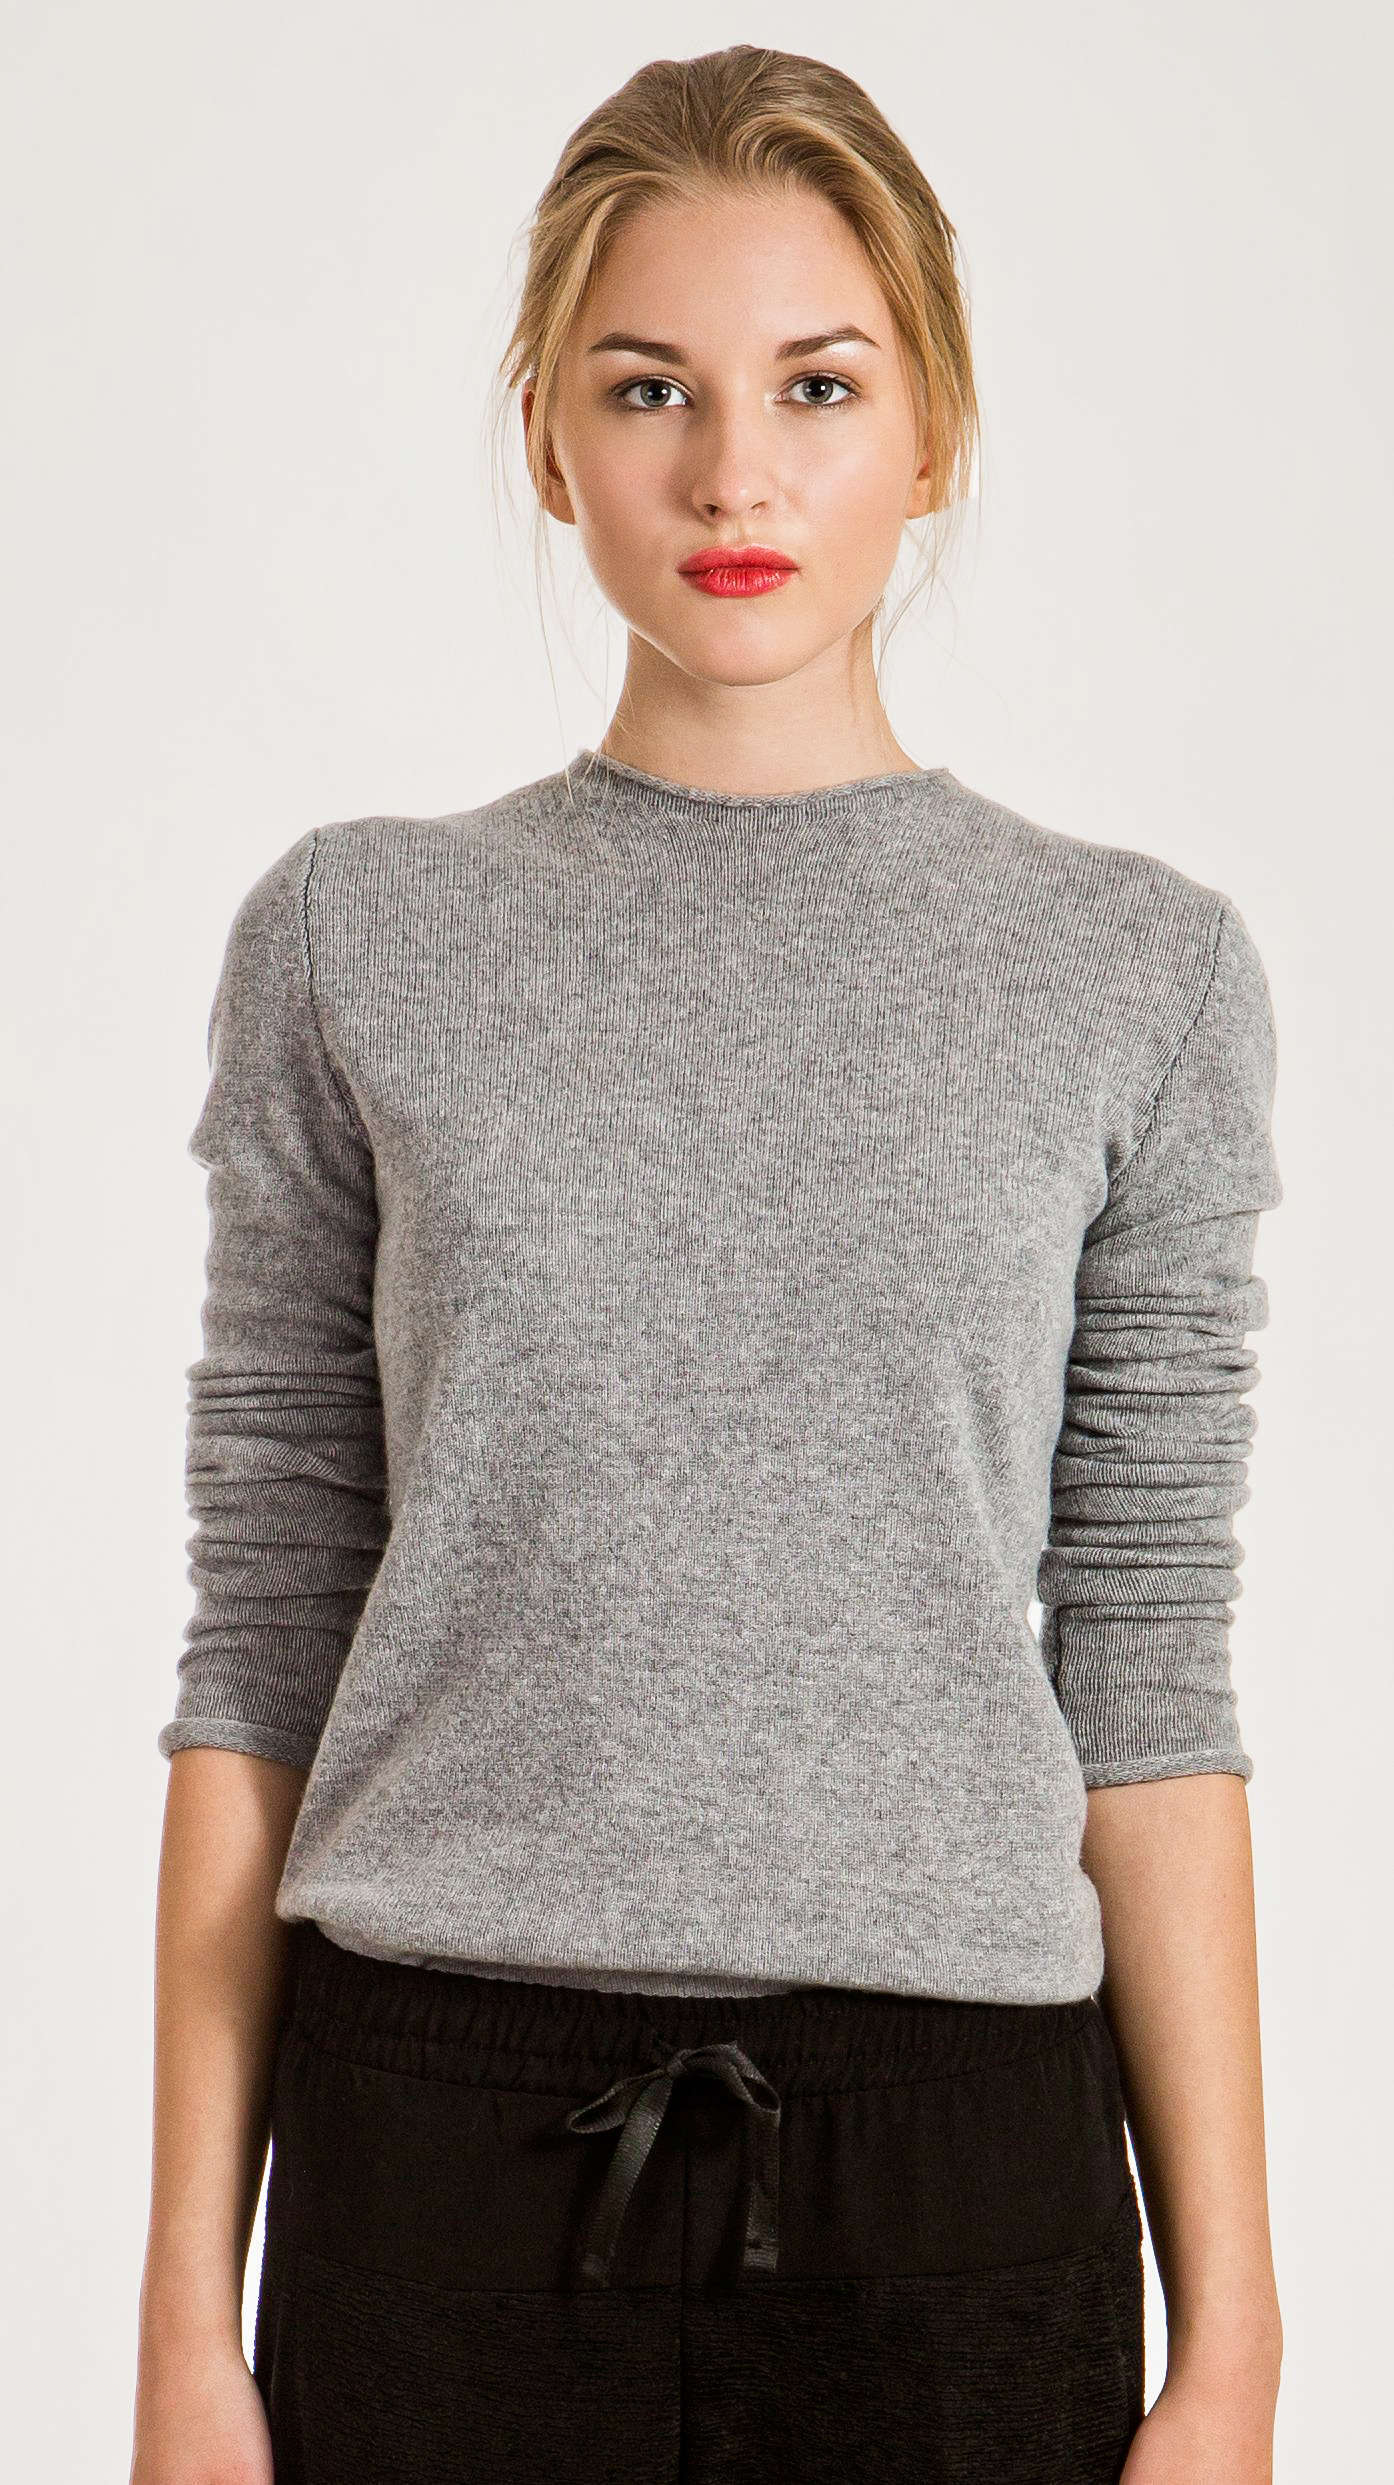 Harrods Cashmere Sweaters Cheap Supplier, Save 53% | jlcatj.gob.mx